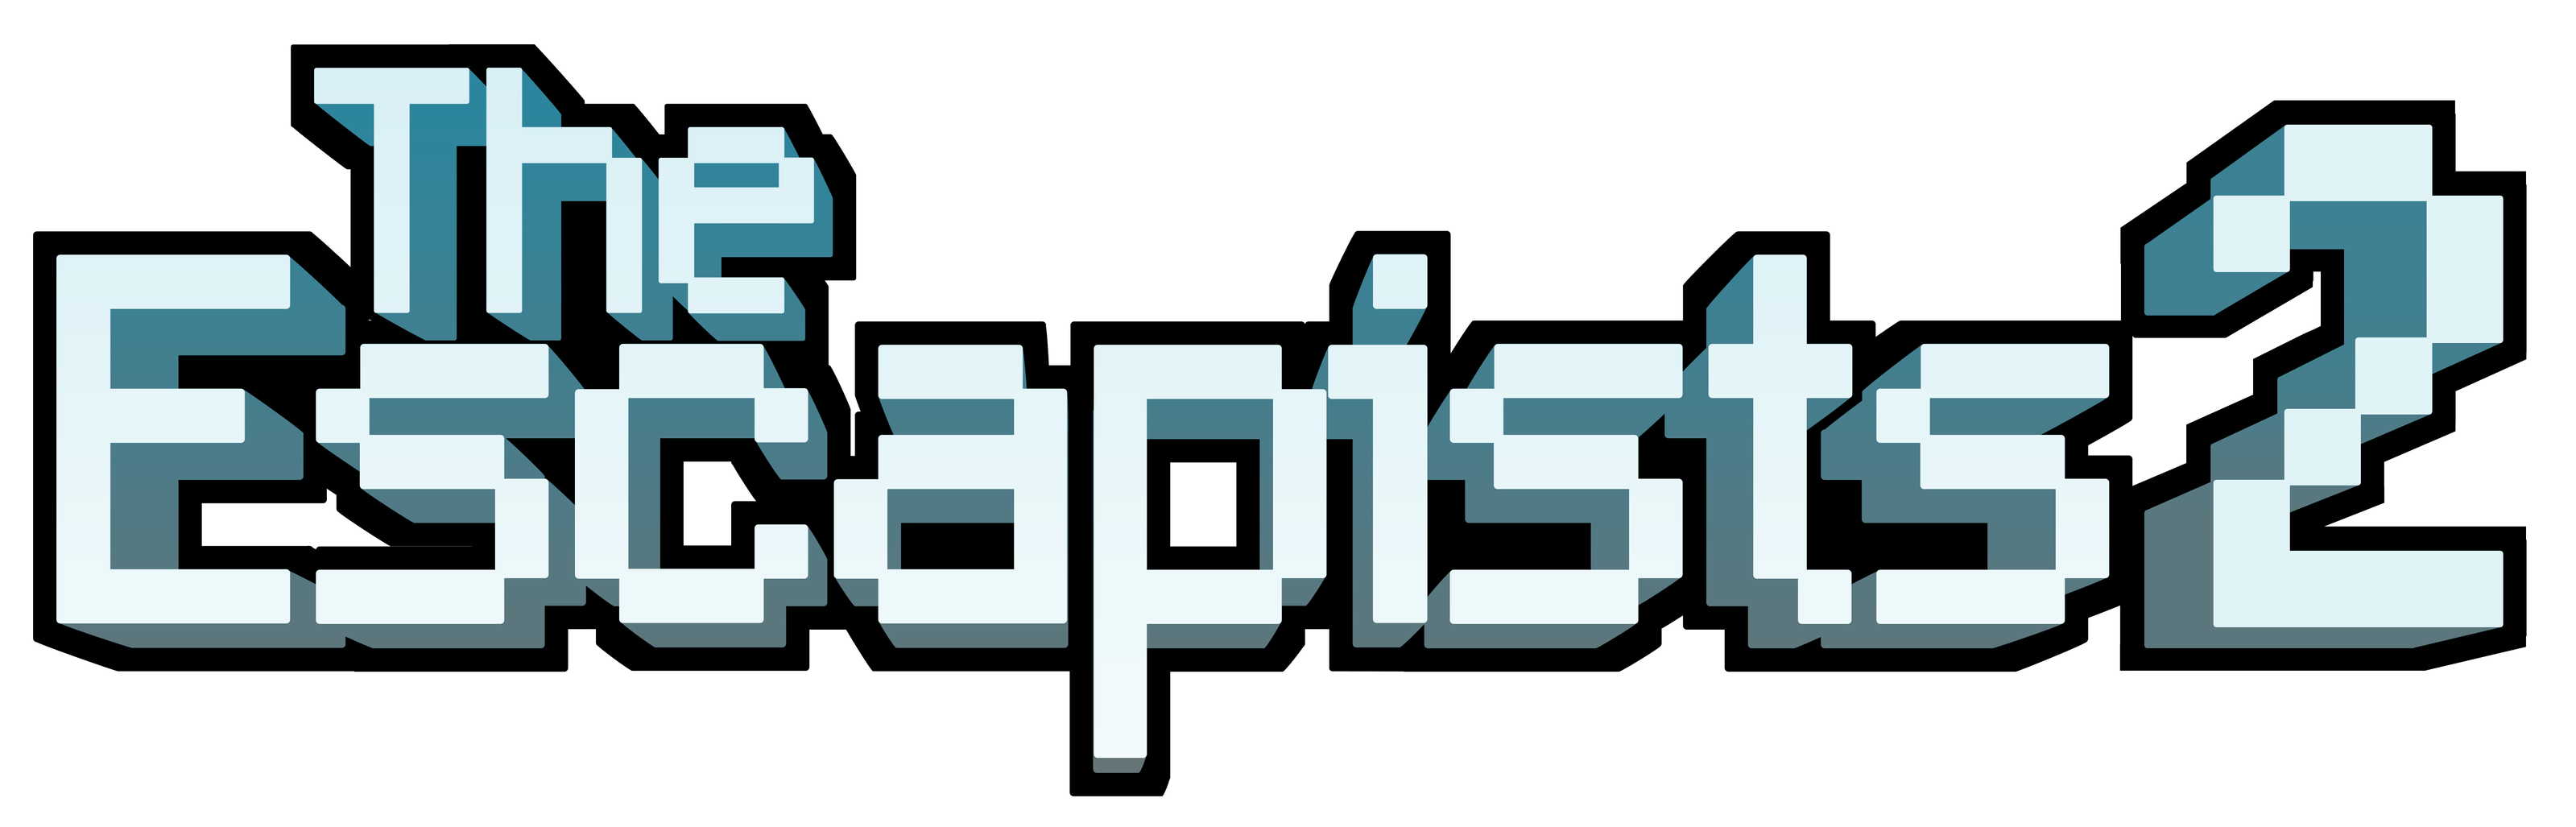 Escaptist Logo - The Escapists 2 Release Date